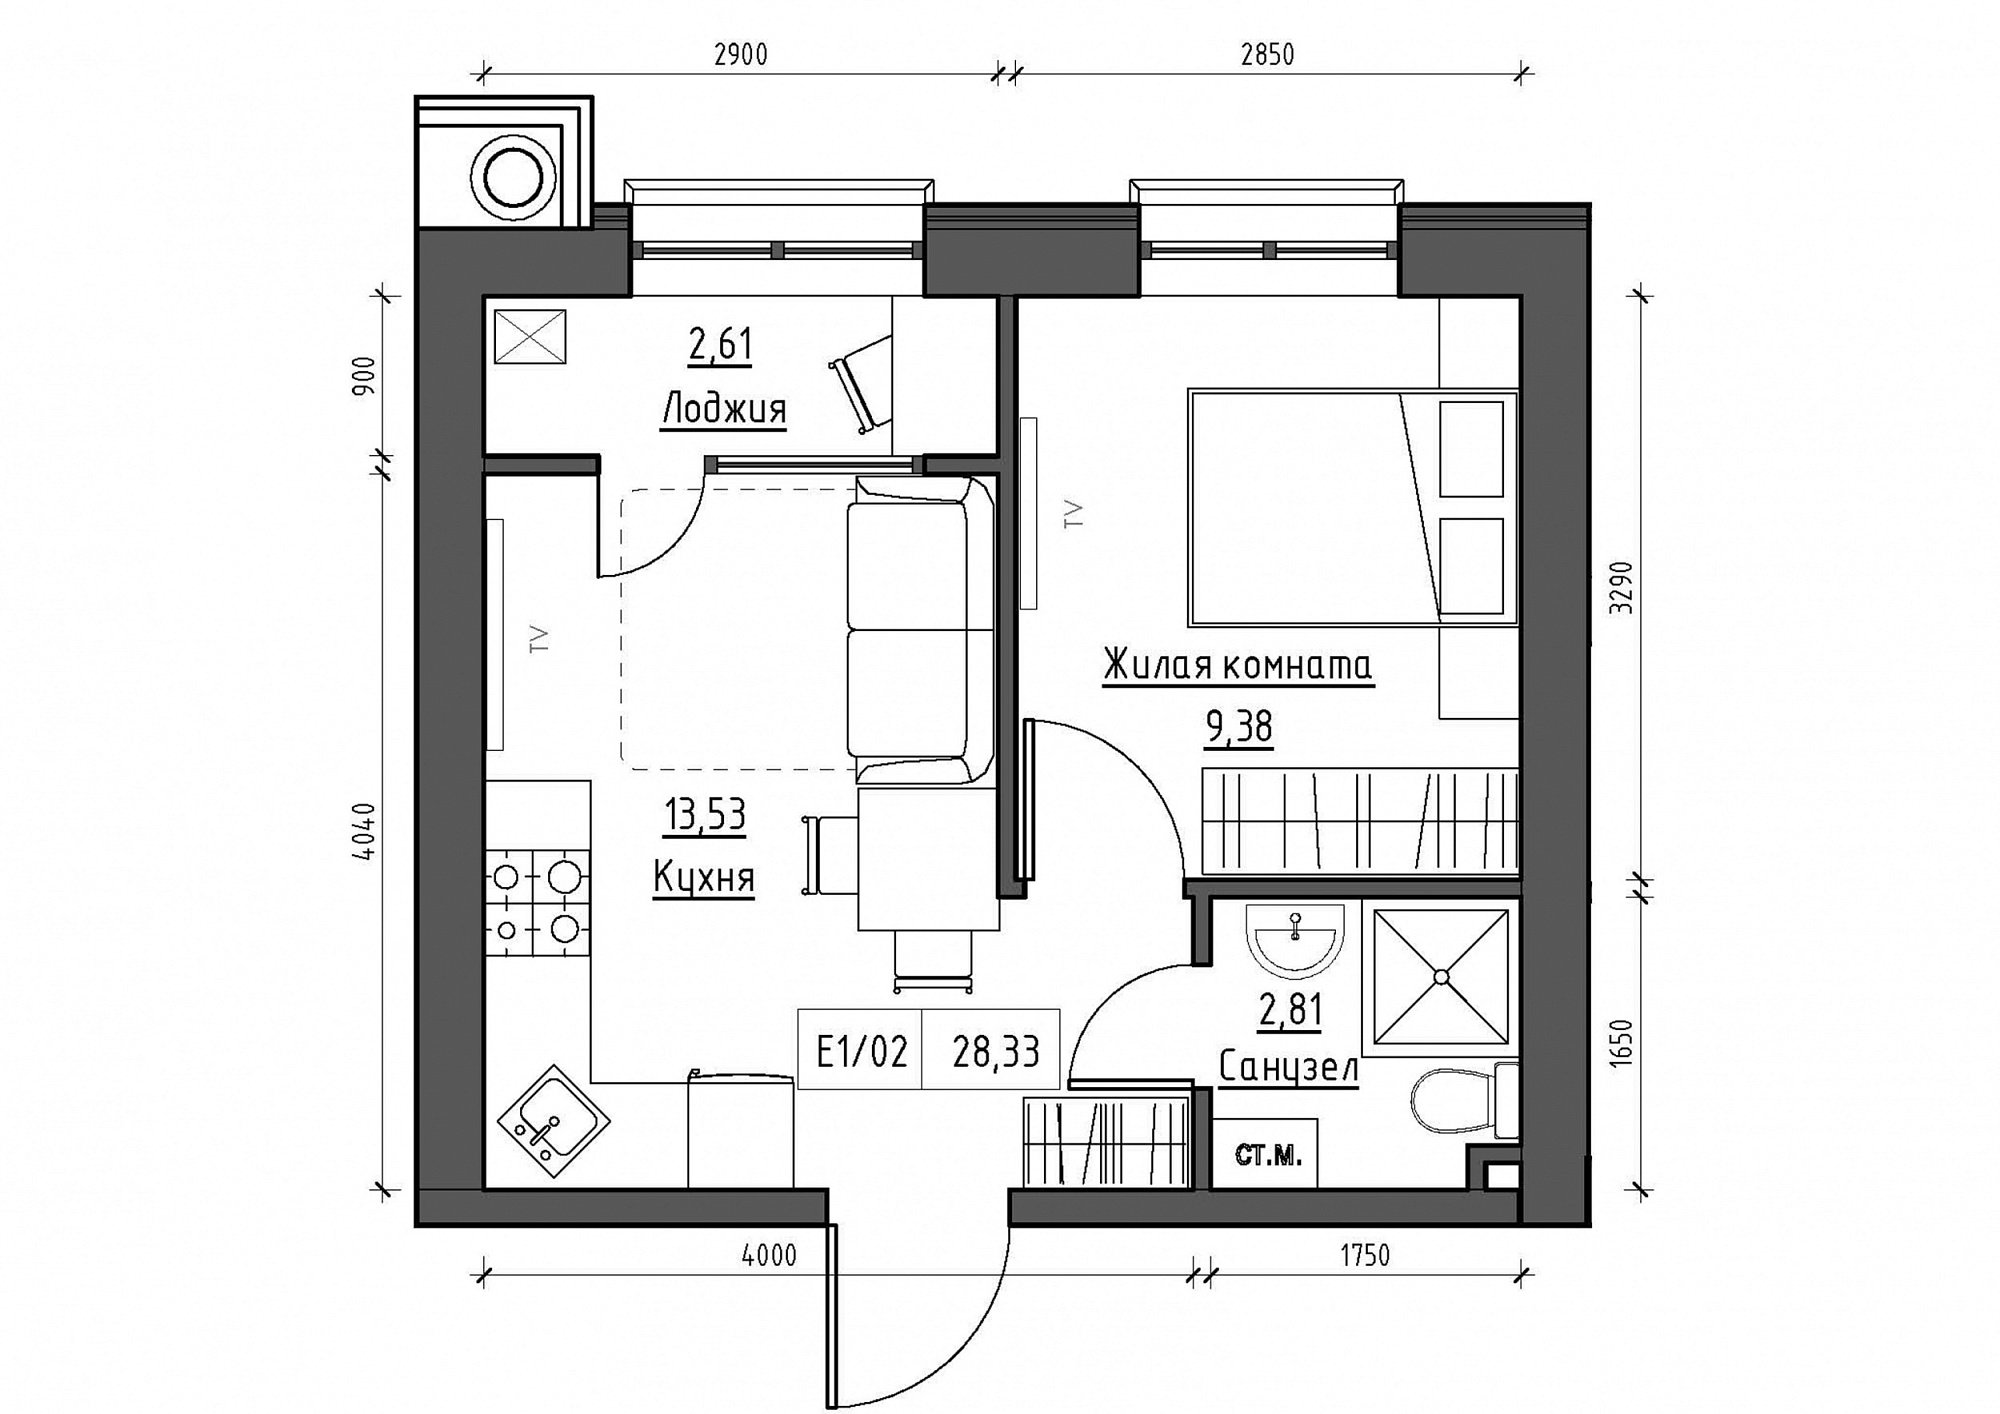 Planning 1-rm flats area 28.33m2, KS-011-01/0015.